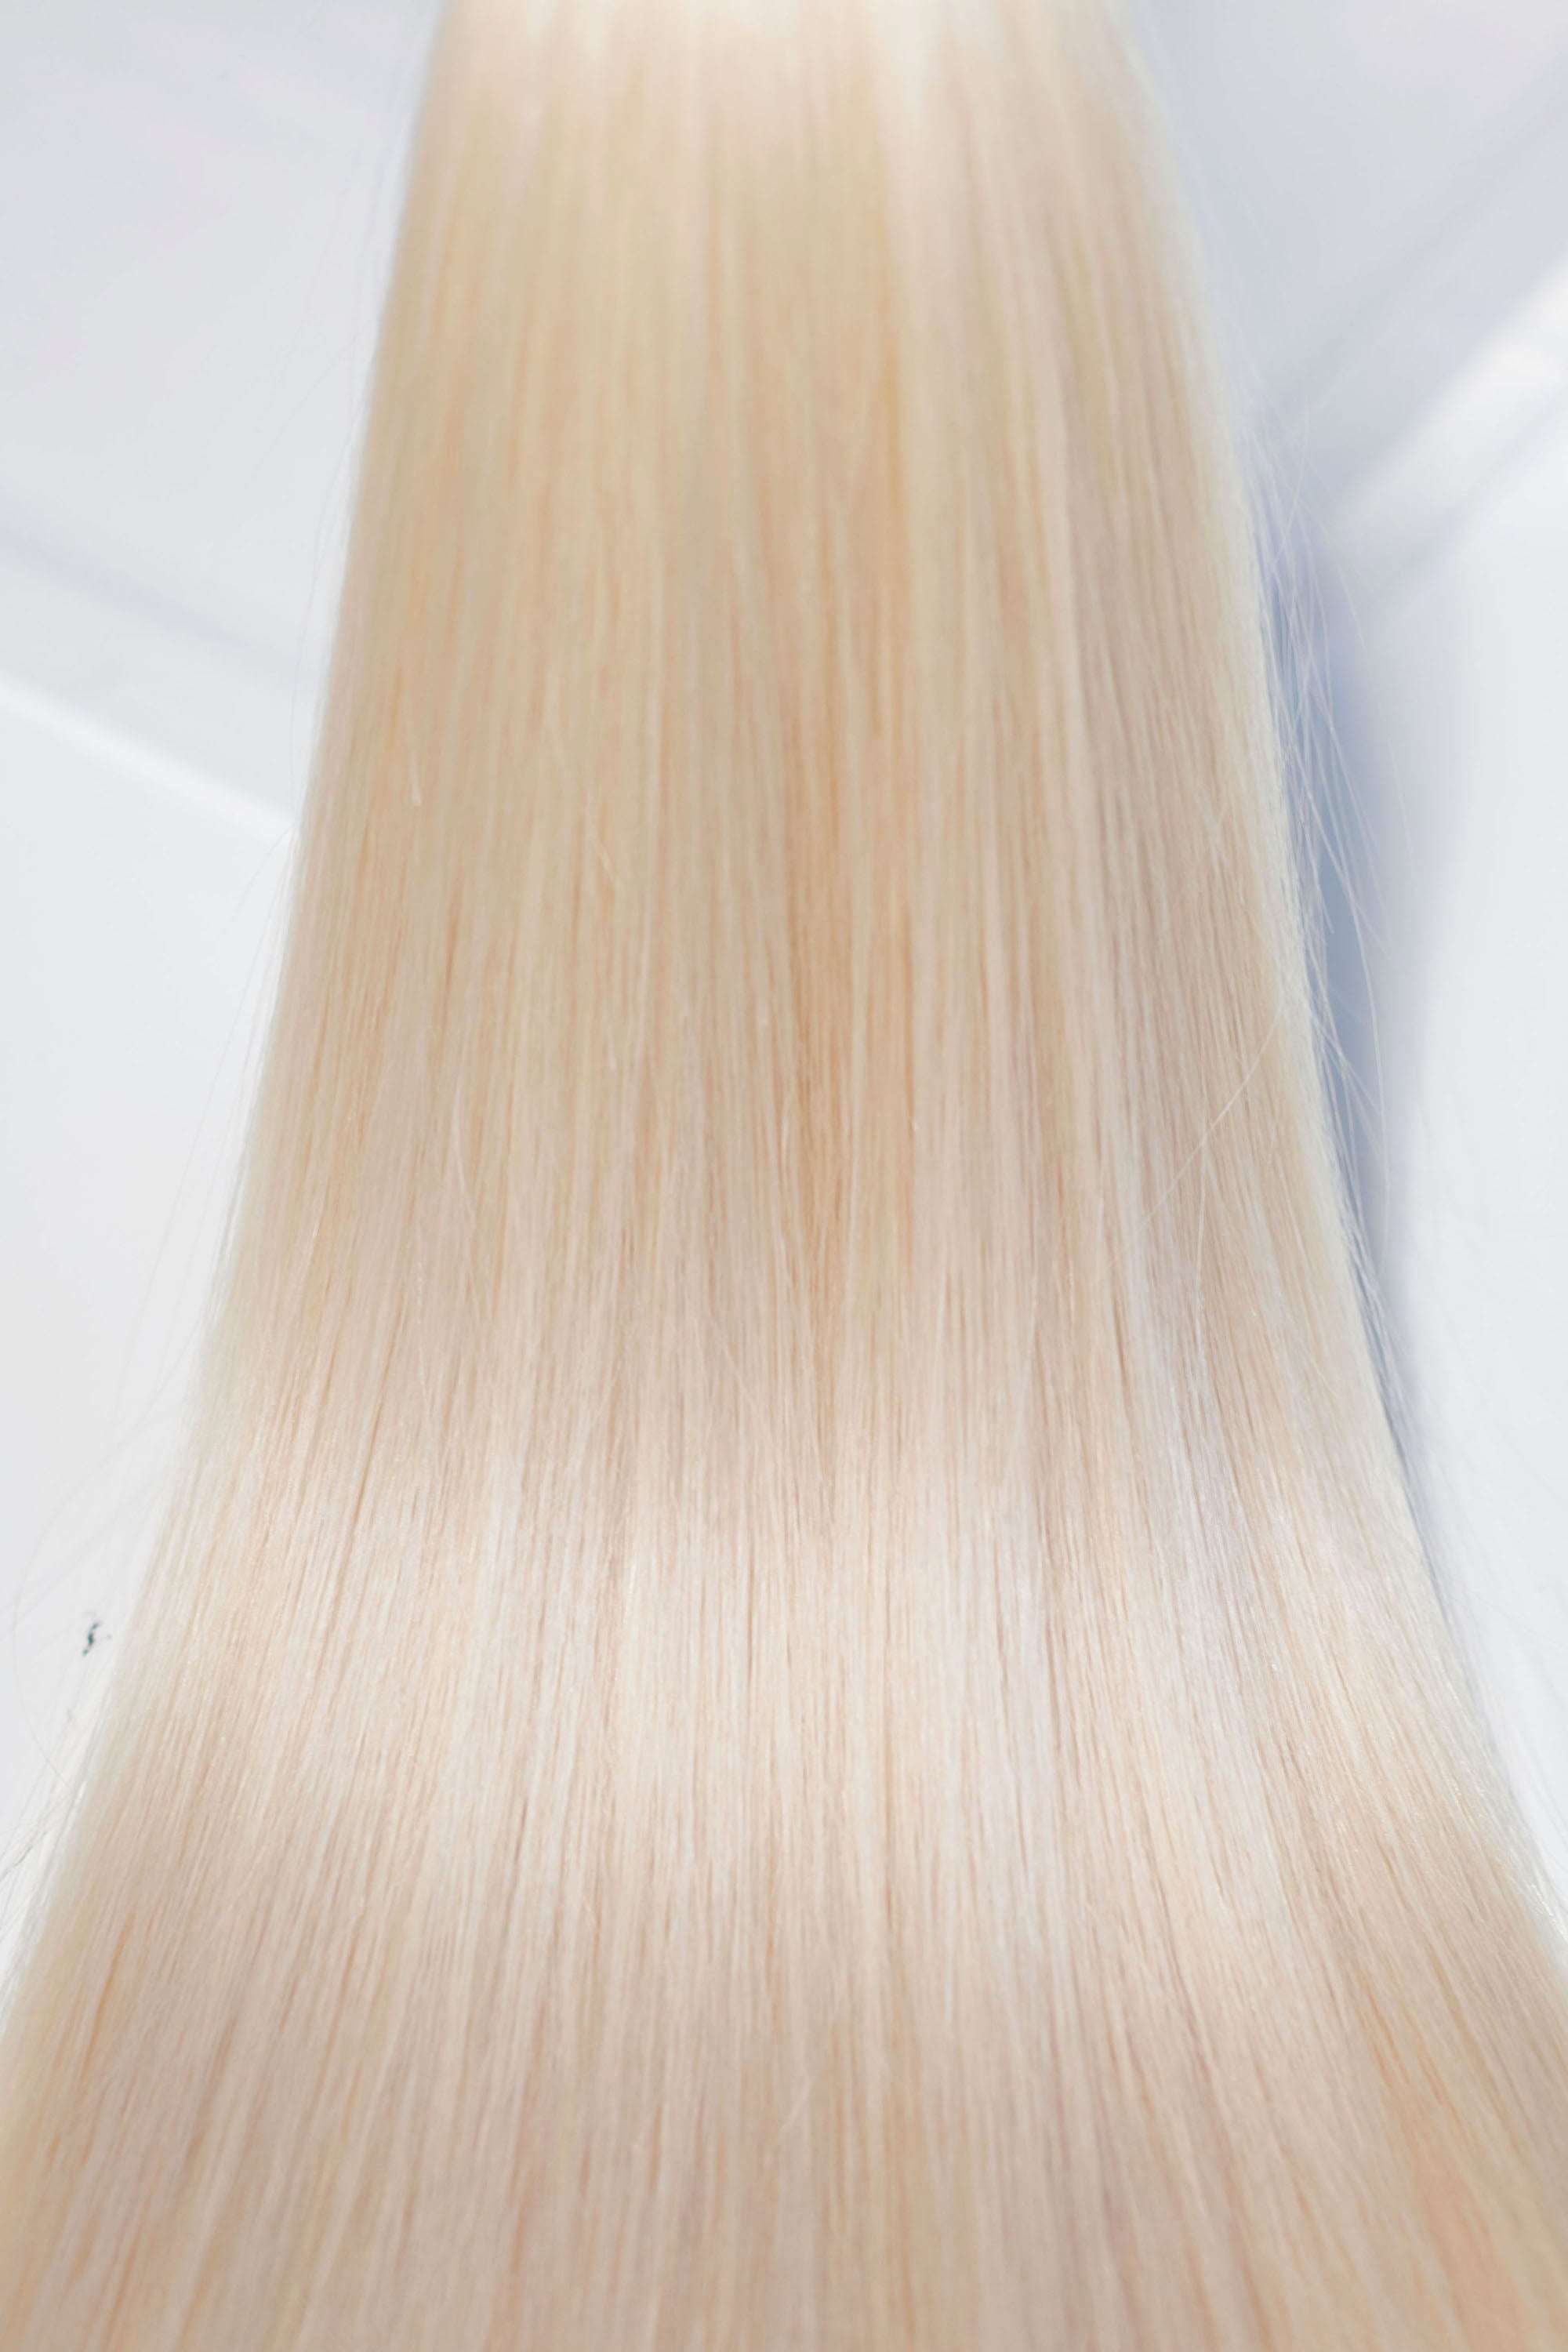 Behair professional Bulk hair "Premium" 26" (65cm) Natural Straight Ice Blond #000 - 25g hair extensions